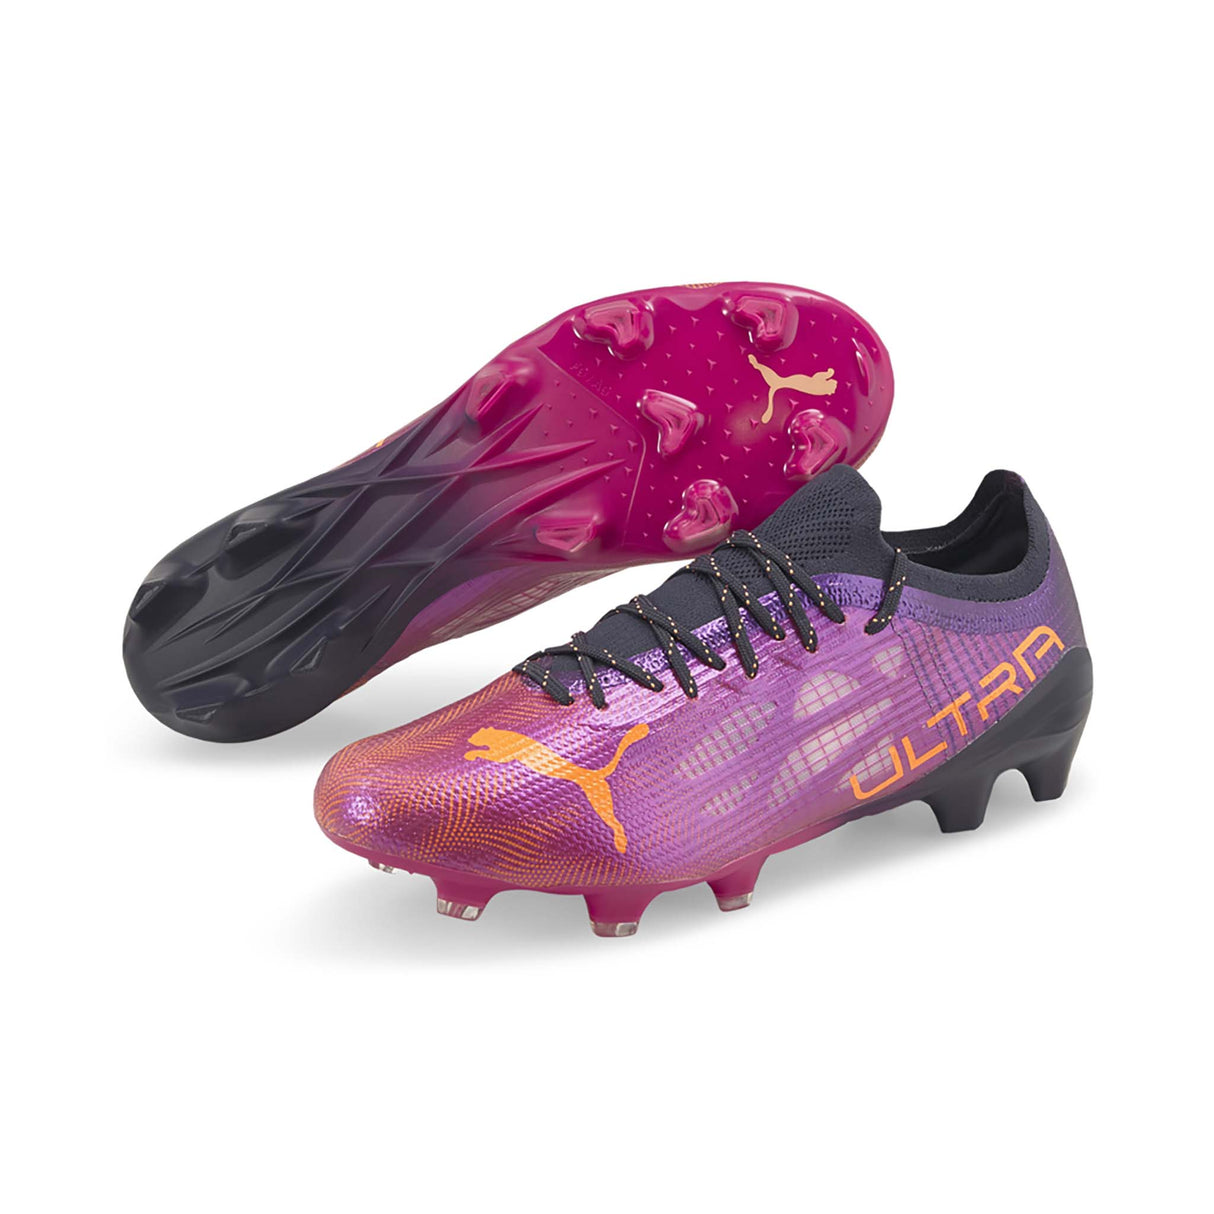 Puma Ultra 1.4 FG/AG chaussures de soccer fuchsia neon citrus parisian paire